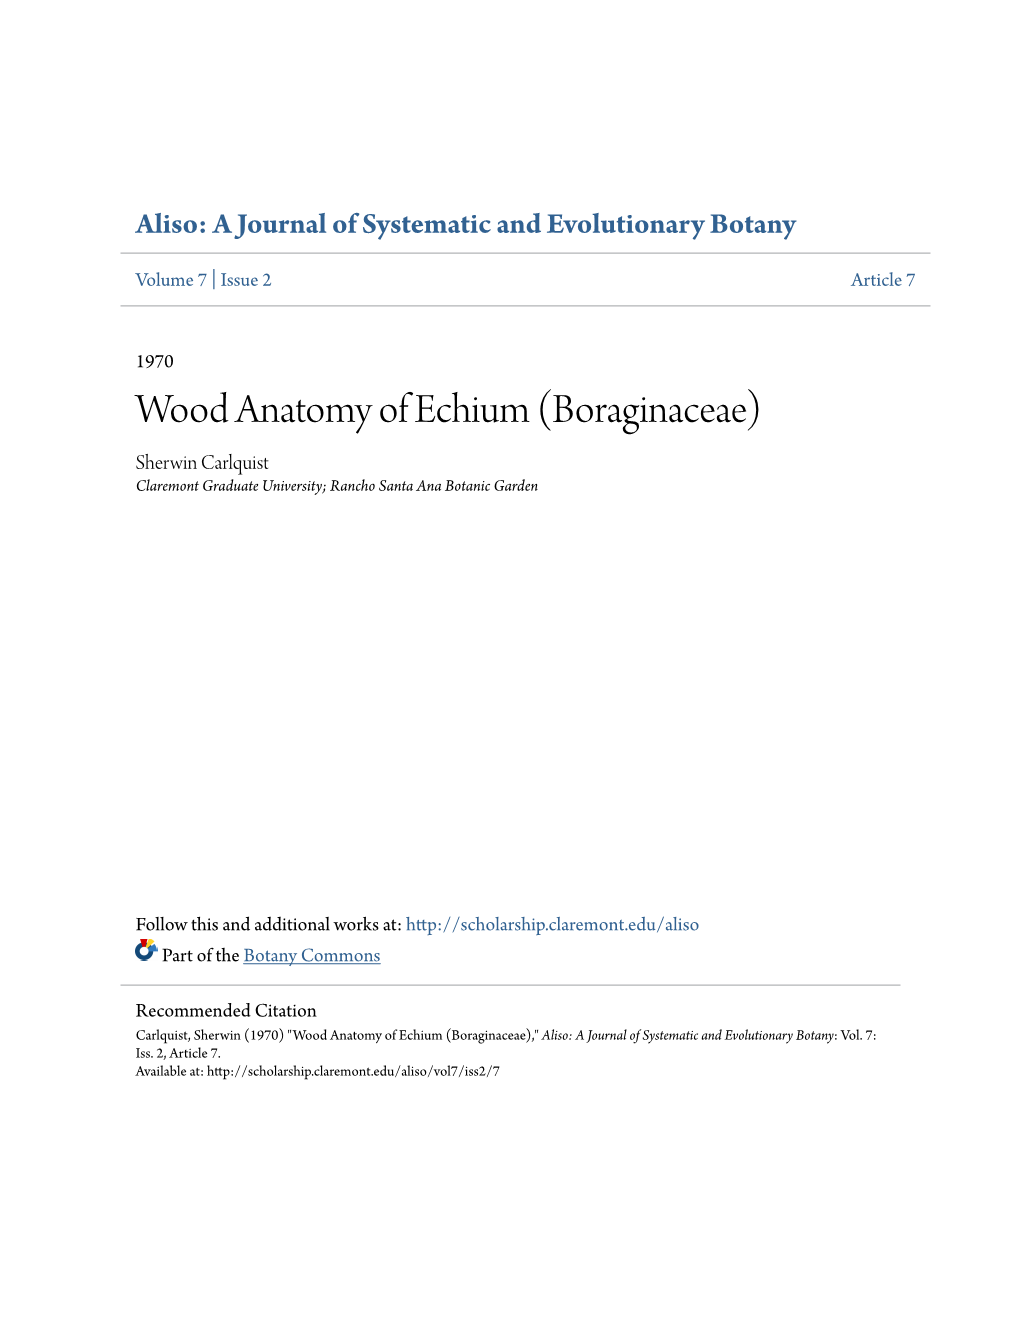 Wood Anatomy of Echium (Boraginaceae) Sherwin Carlquist Claremont Graduate University; Rancho Santa Ana Botanic Garden